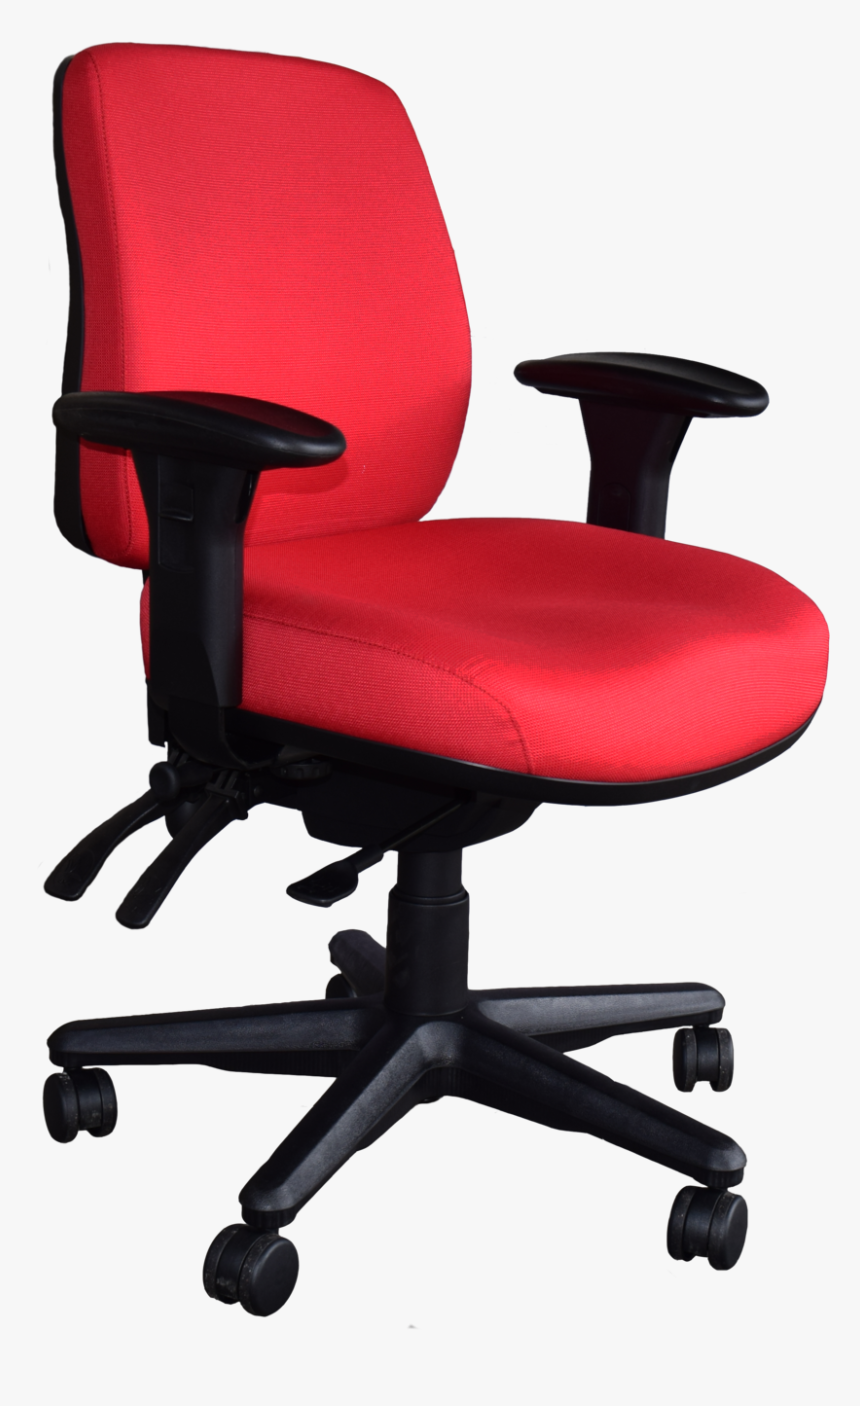 Sparkchair2 - Ergonomic Chair Office Master